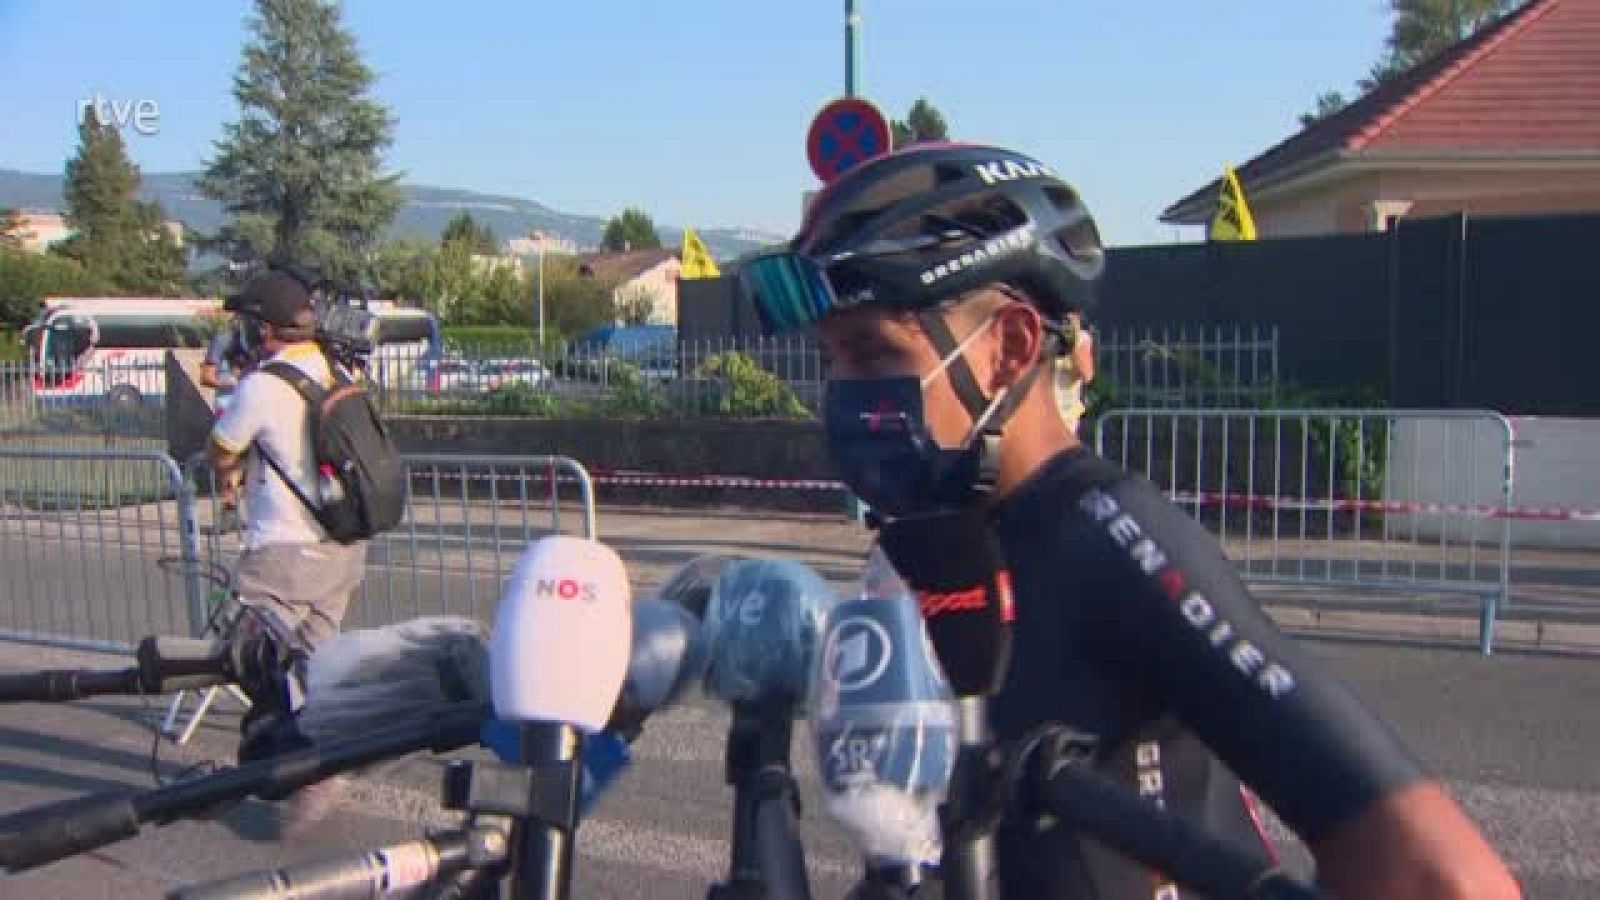 Etapa 15 del Tour de Francia 2020 | Egan Bernal: "He sufrido desde la primera subida"